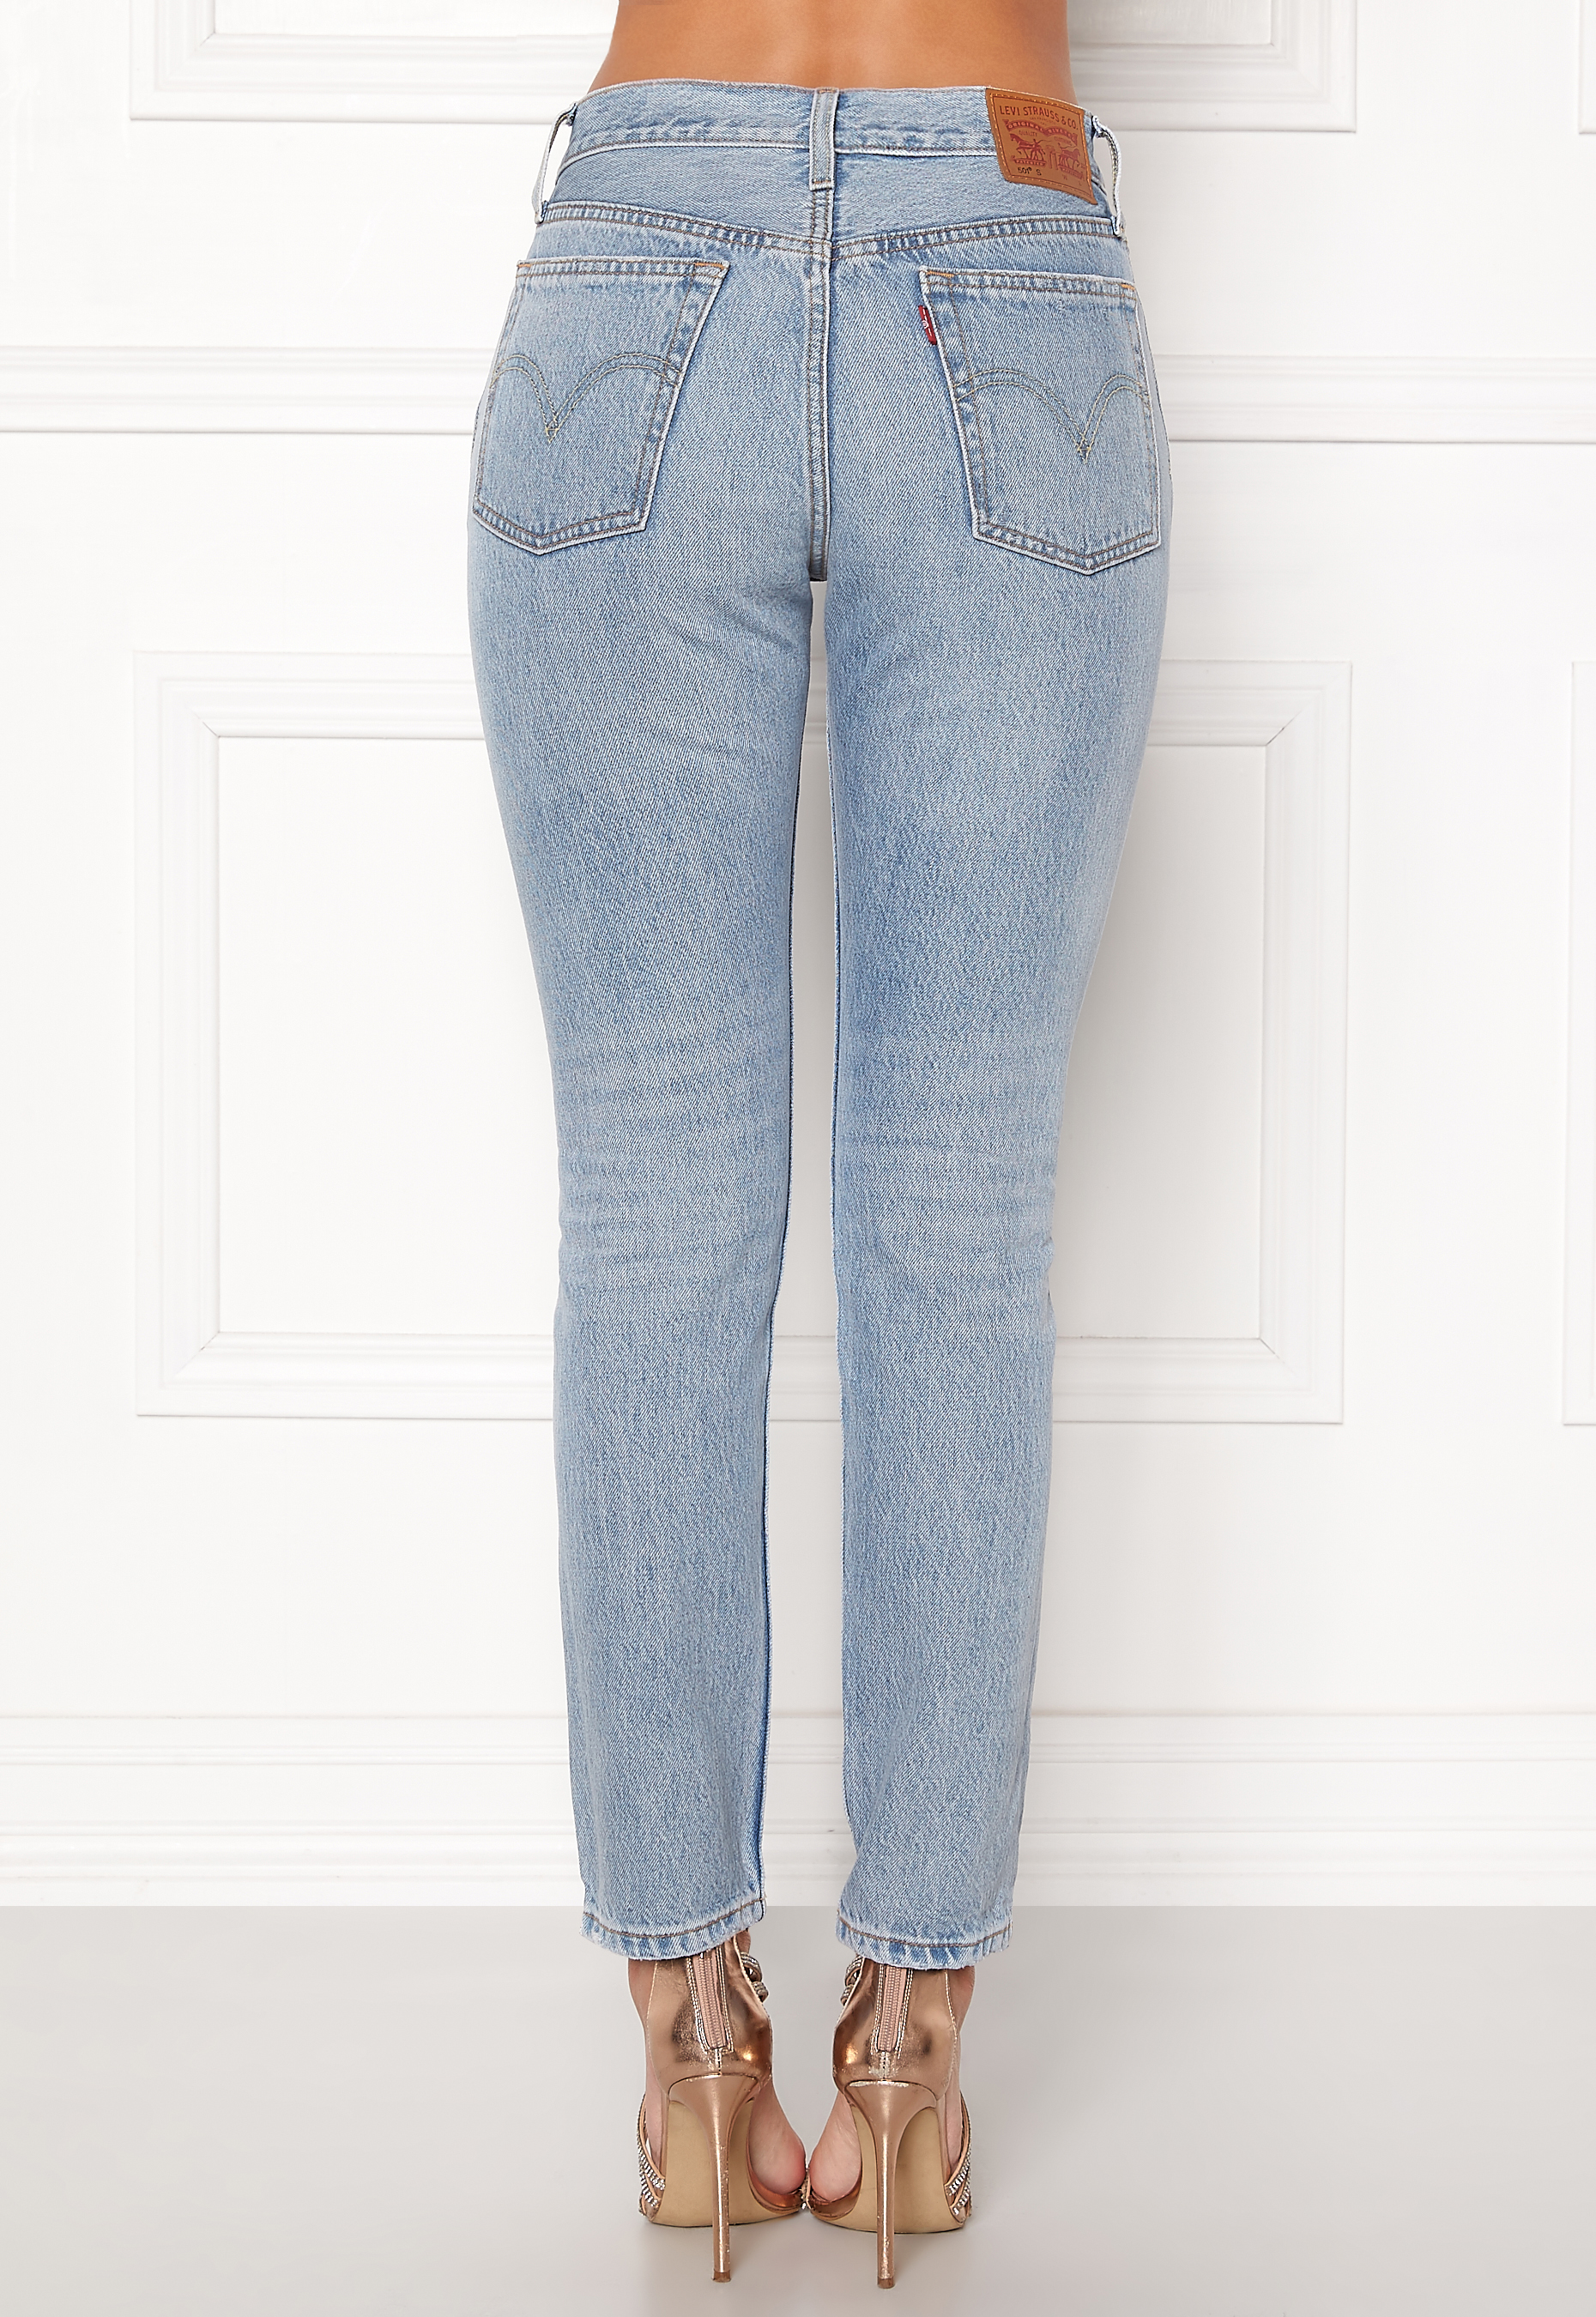 jeans 501 skinny lovefool